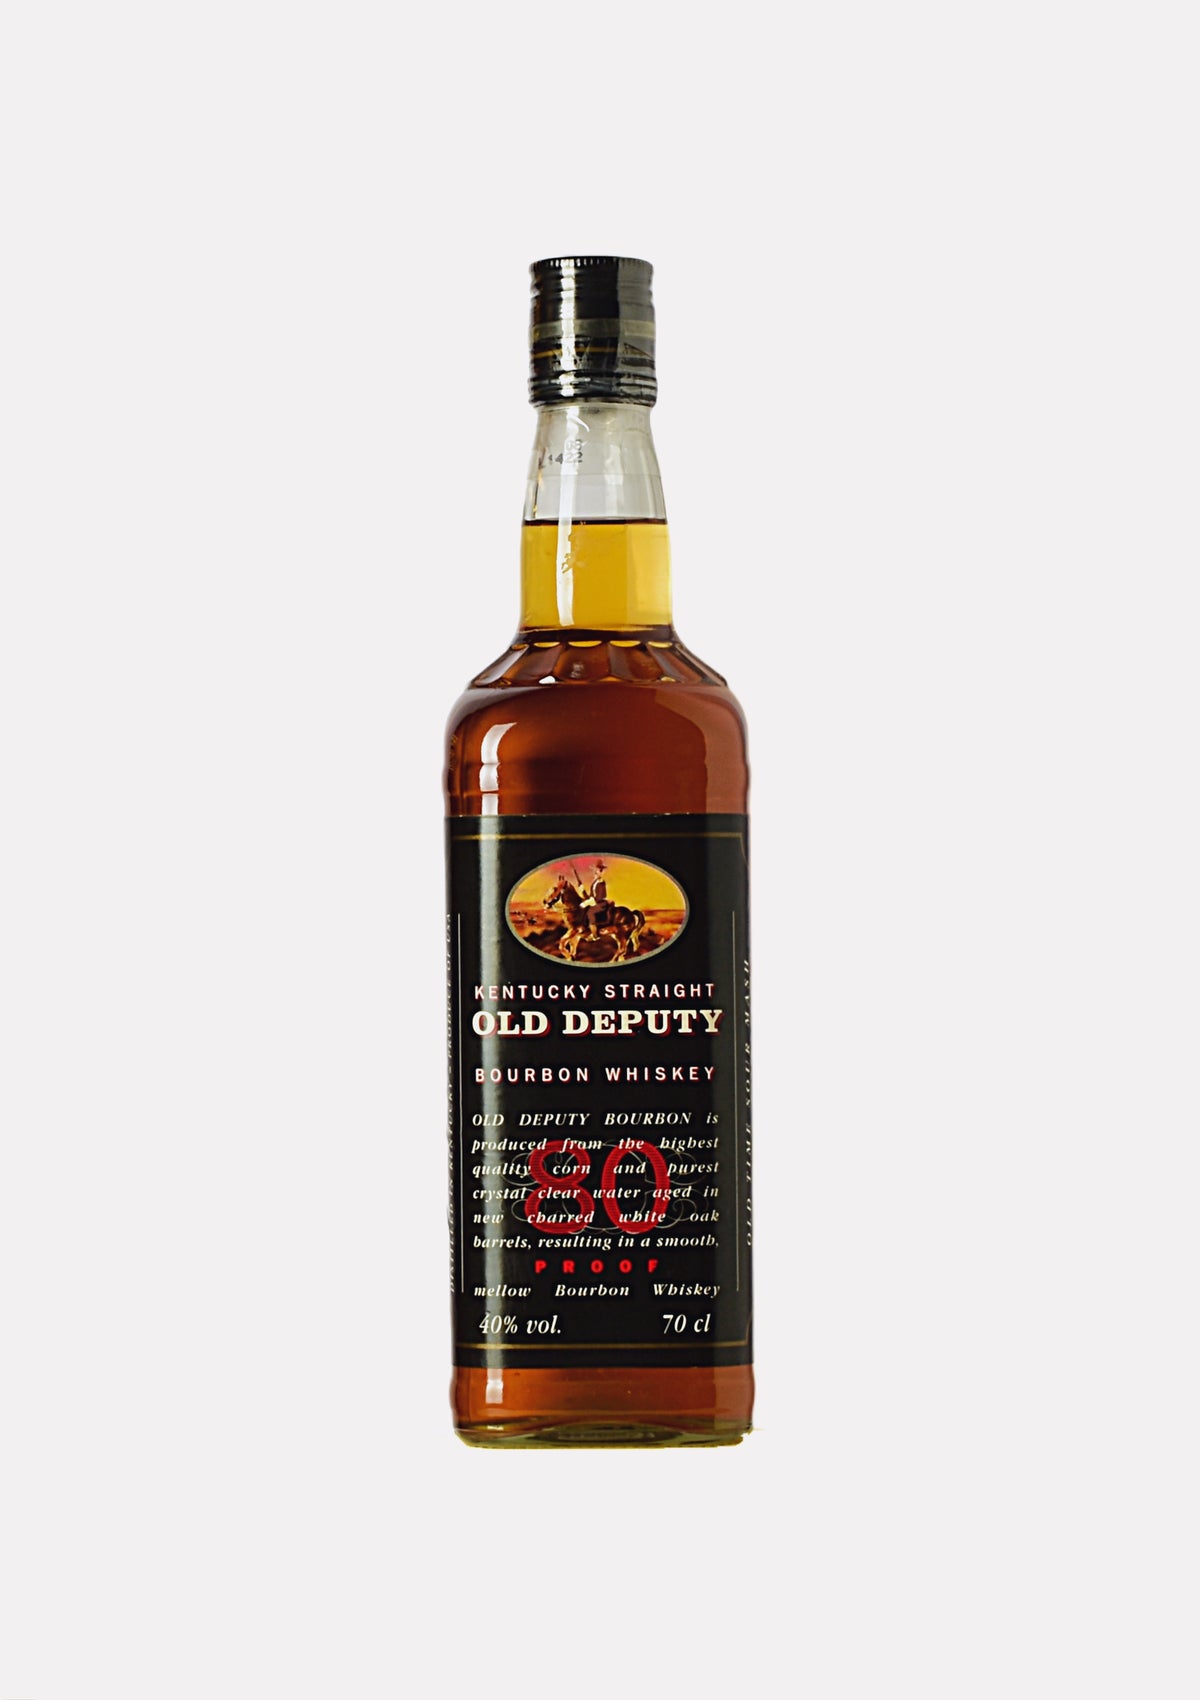 Old Deputy Kentucky Straight Bourbon Whiskey